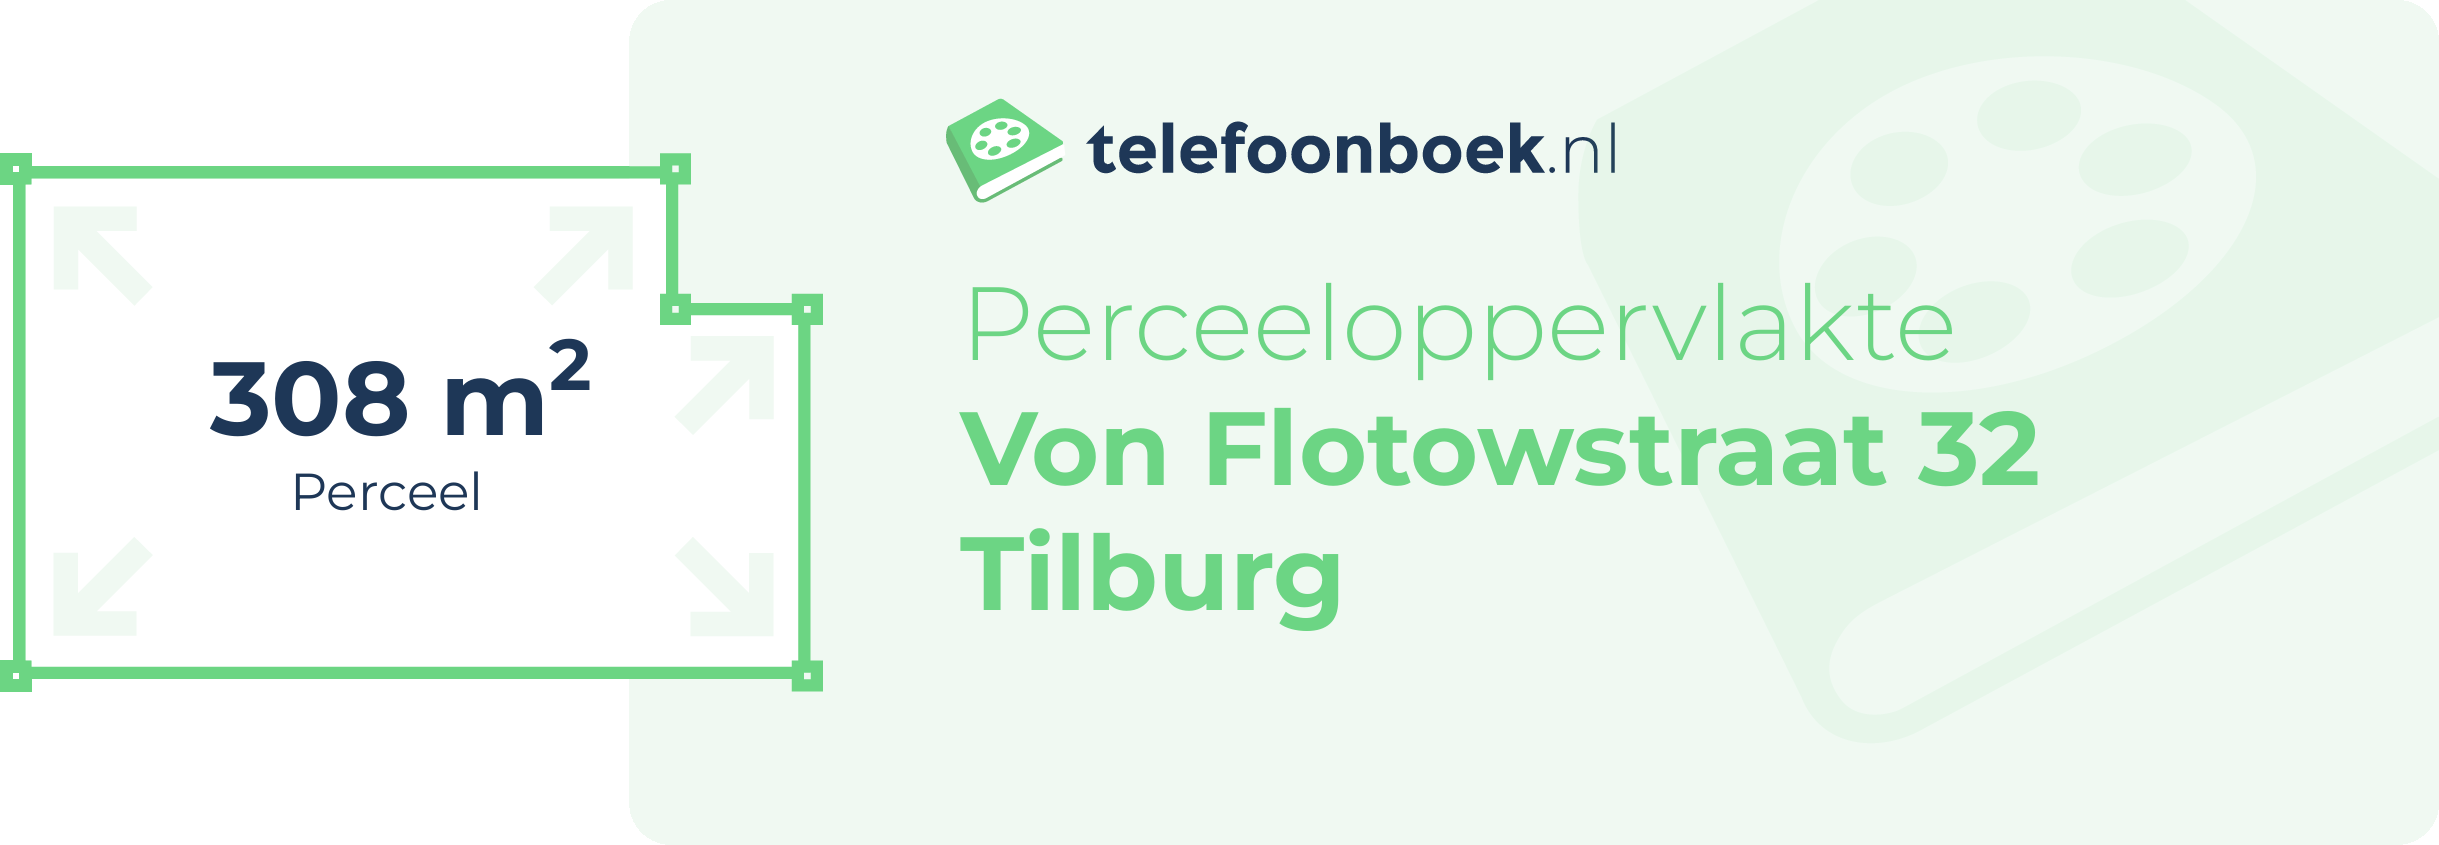 Perceeloppervlakte Von Flotowstraat 32 Tilburg